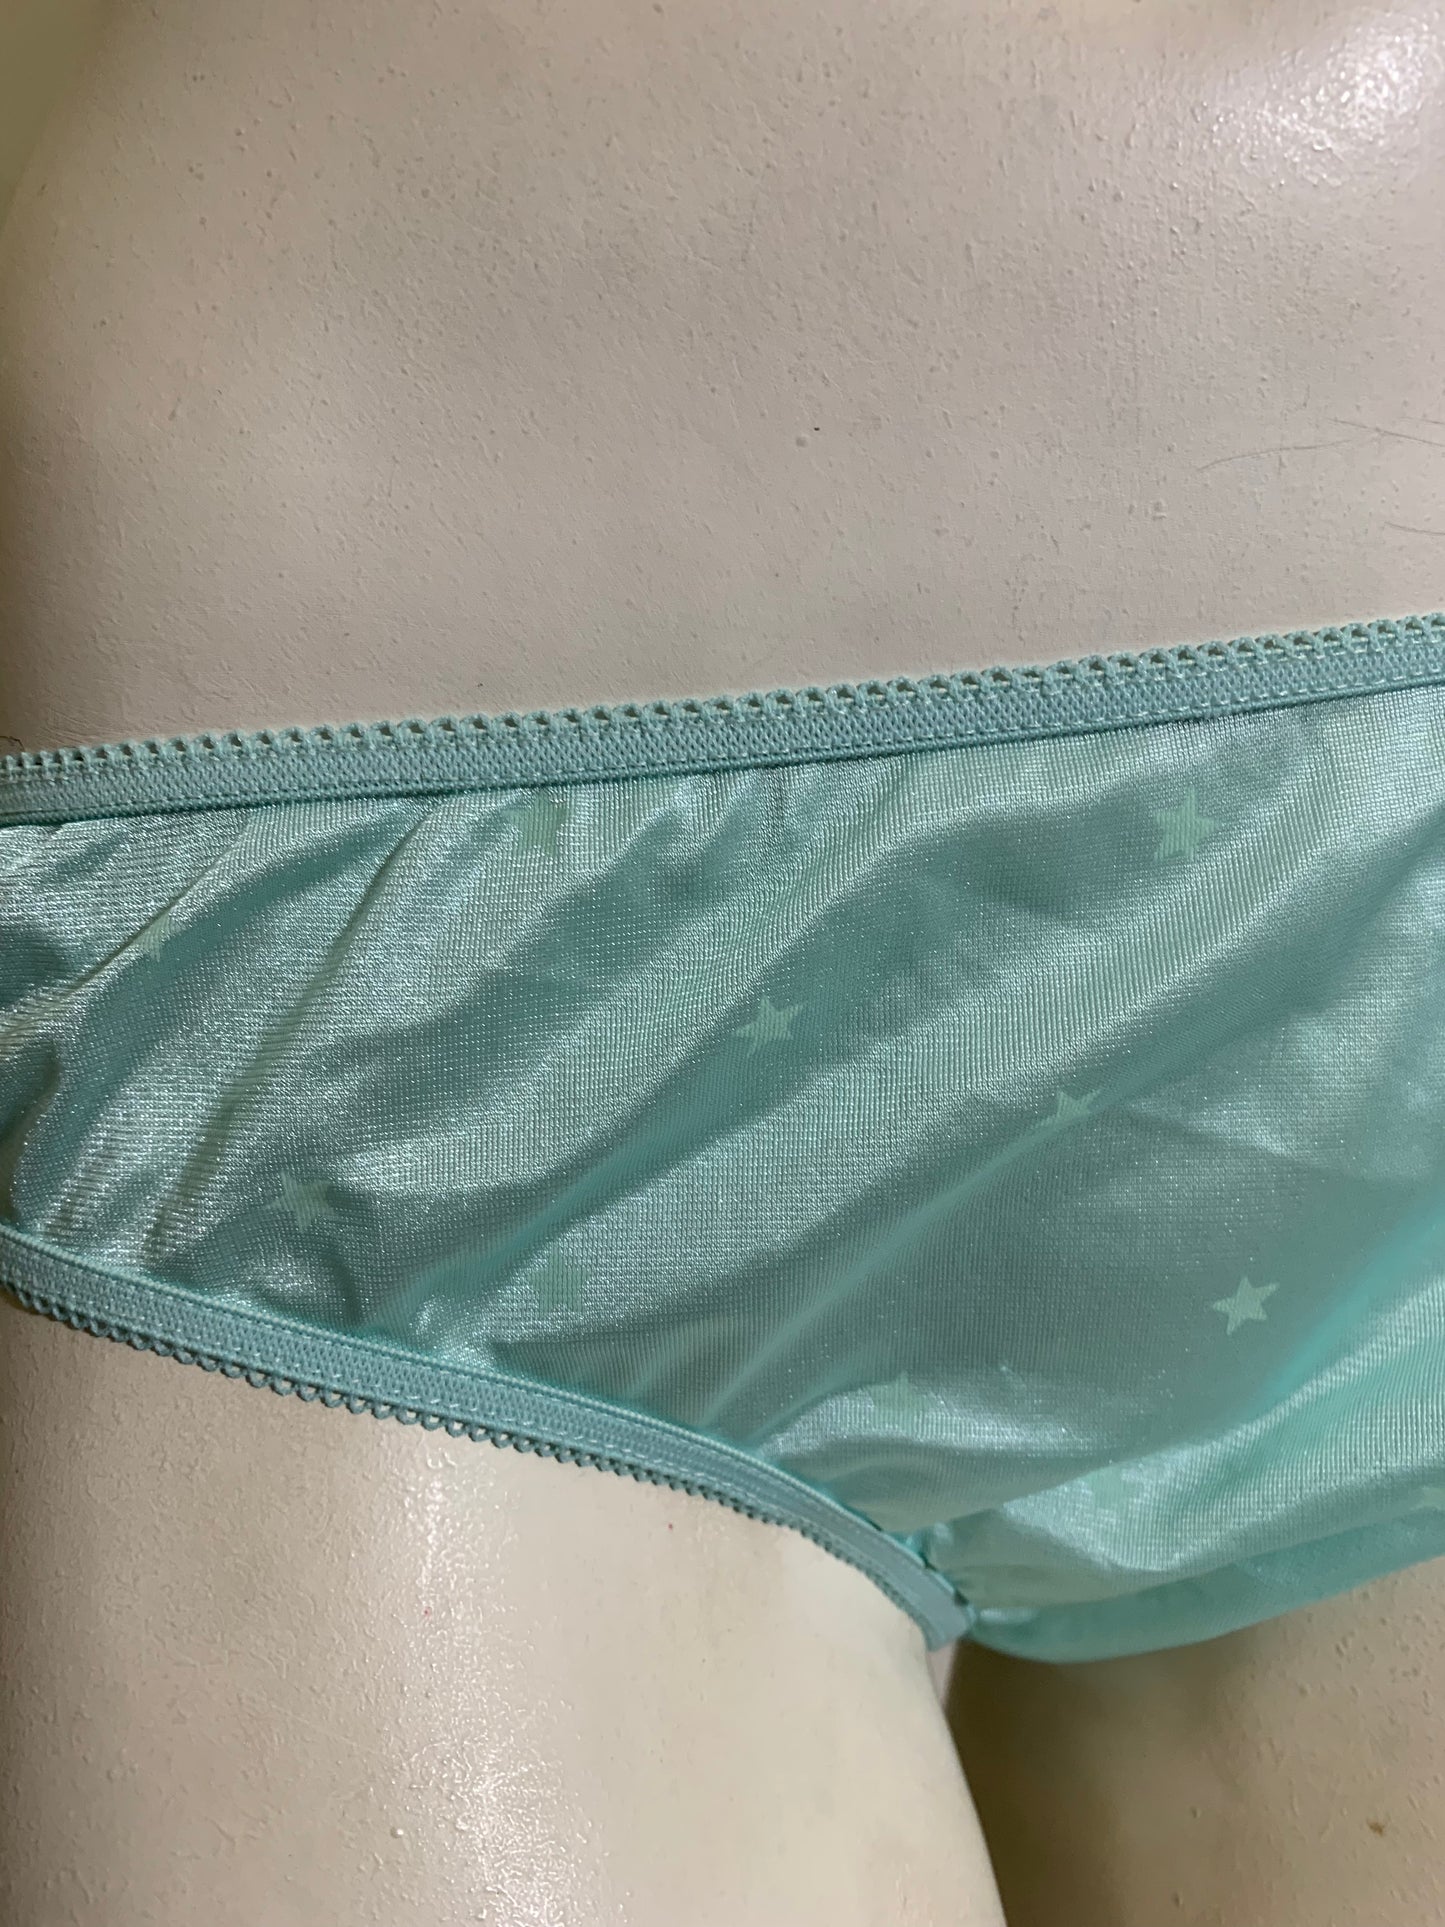 Aqua Star Print Babydoll Pajamas with Matching Panties circa 1970s